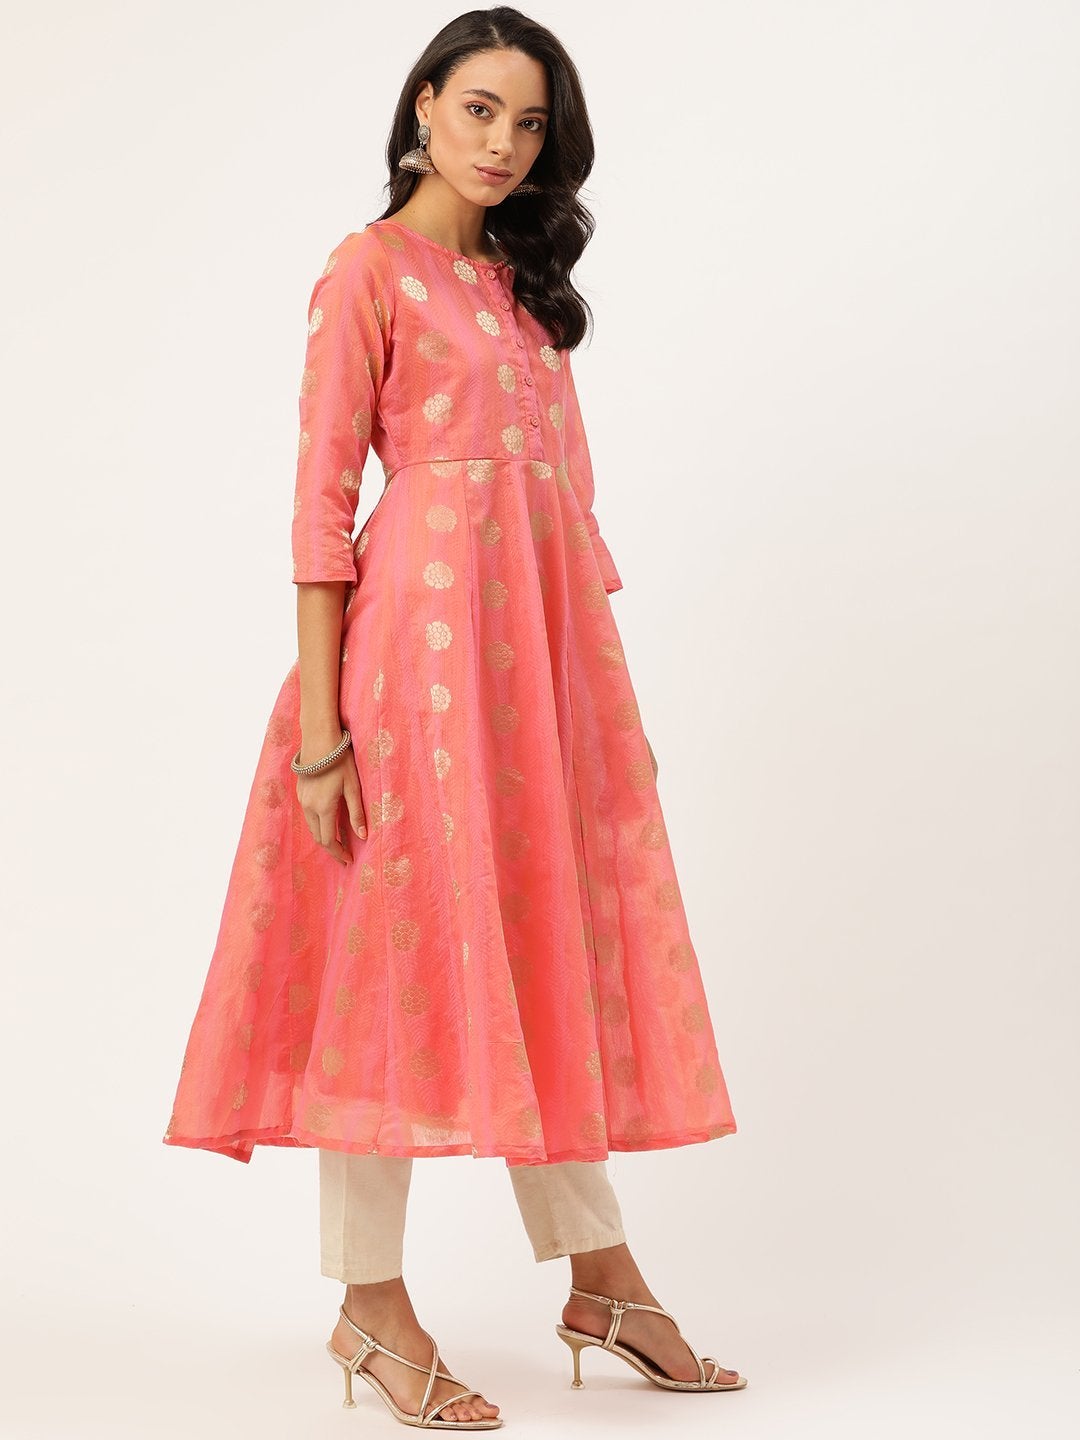 Women's Pink Chanderi Jacquard Anarkali Kurta - SHAE